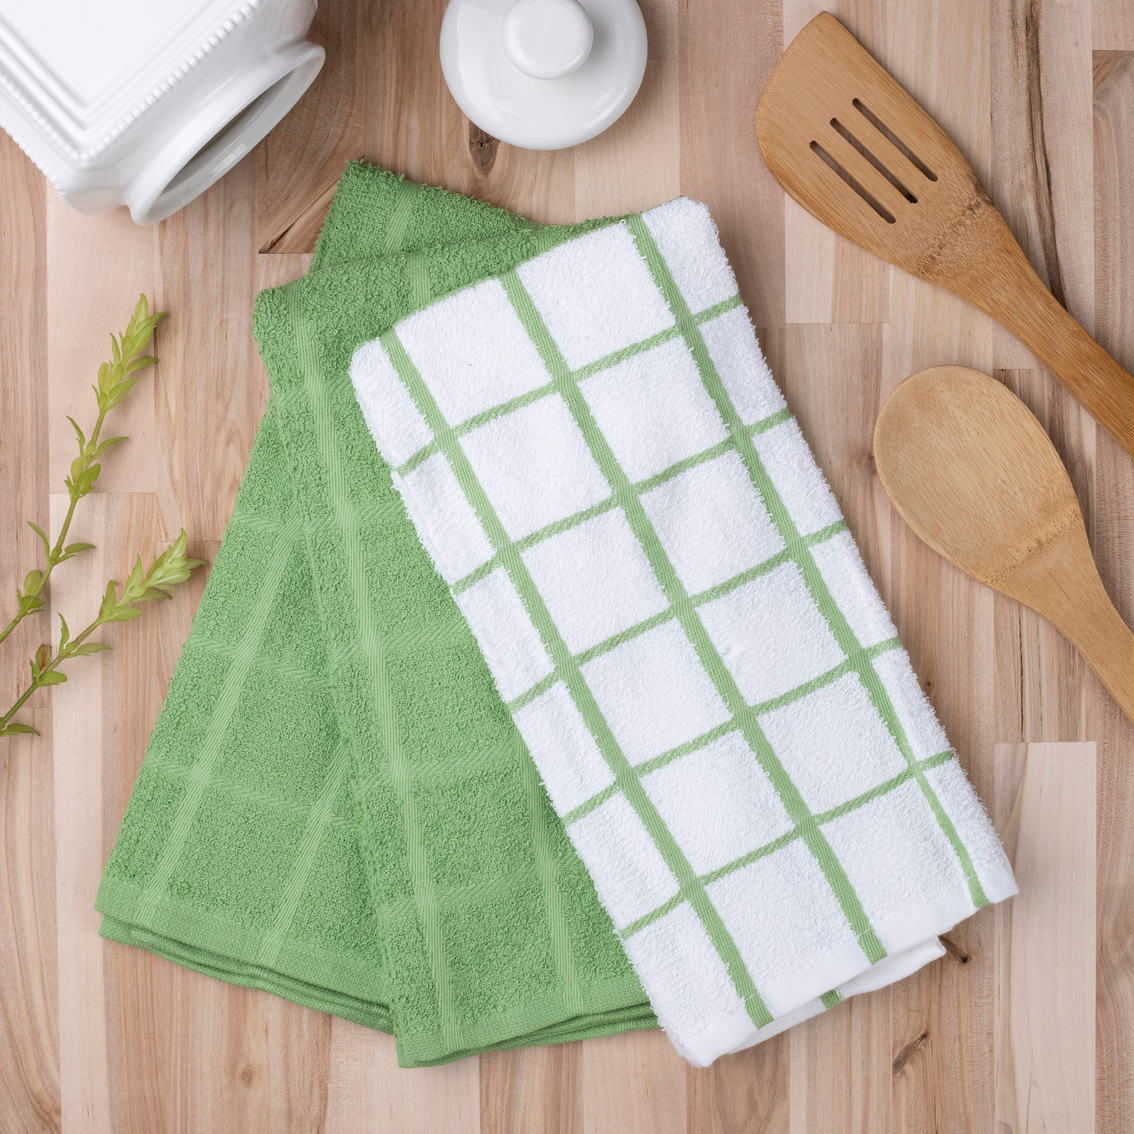 1888 Mills Classic Essentials Deep Claret Kitchen Towels 3 pk. - Image 2 of 3